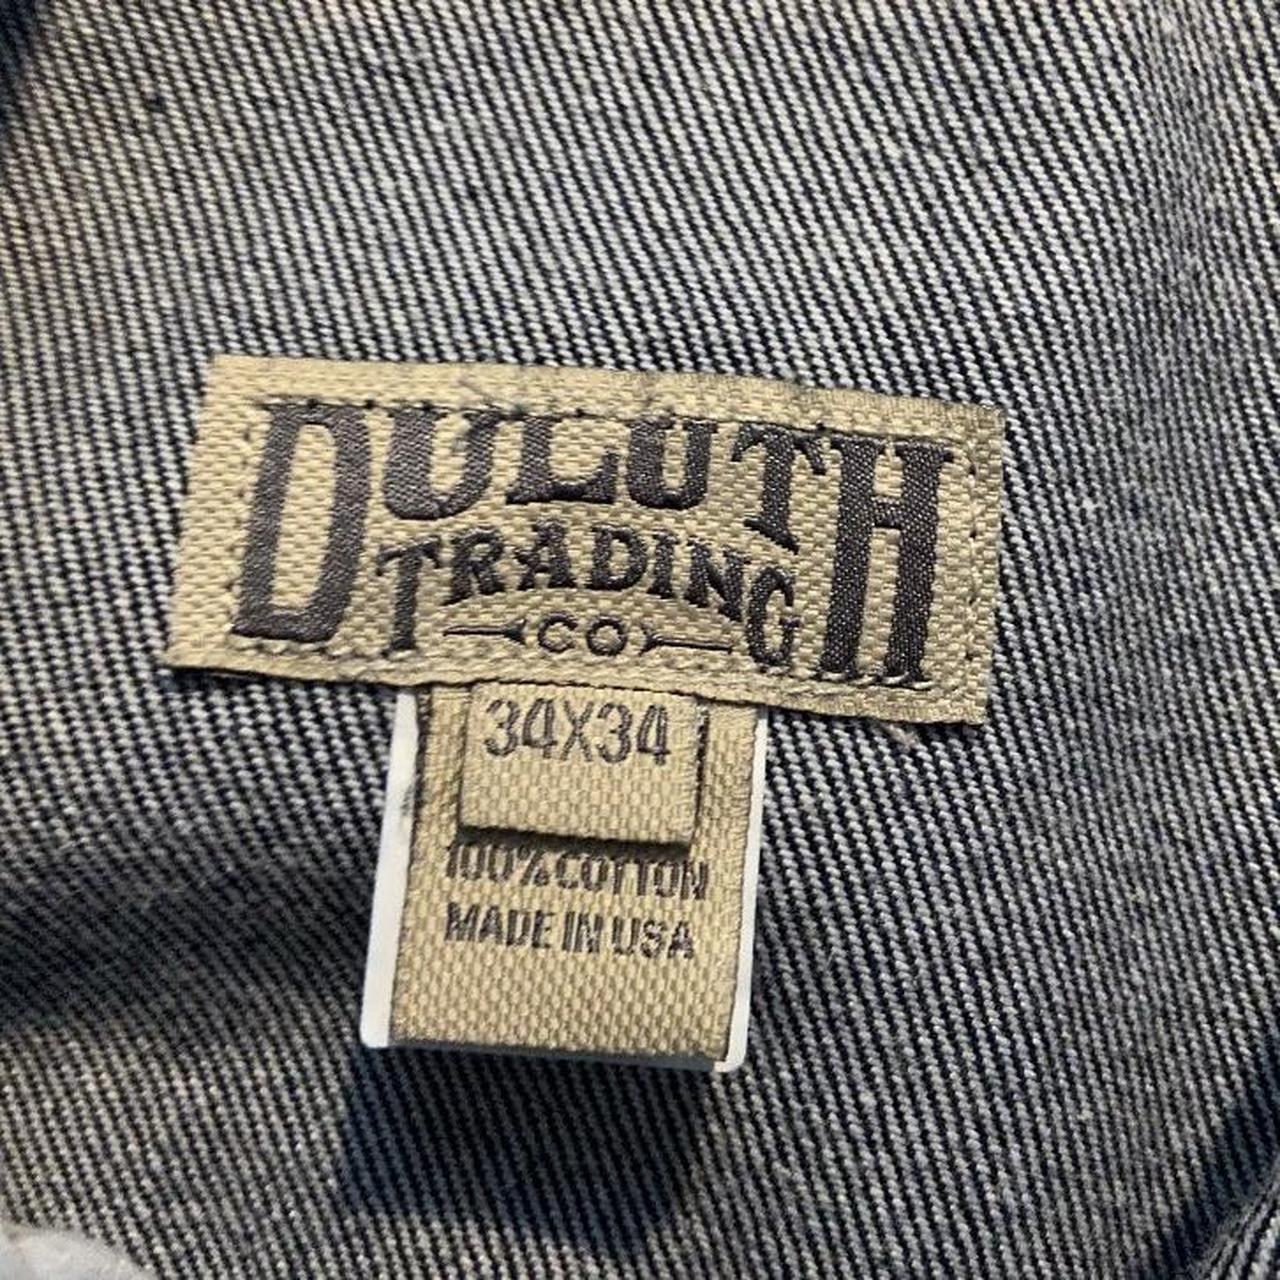 Vintage Duluth Trading Co. Double Knee... - Depop